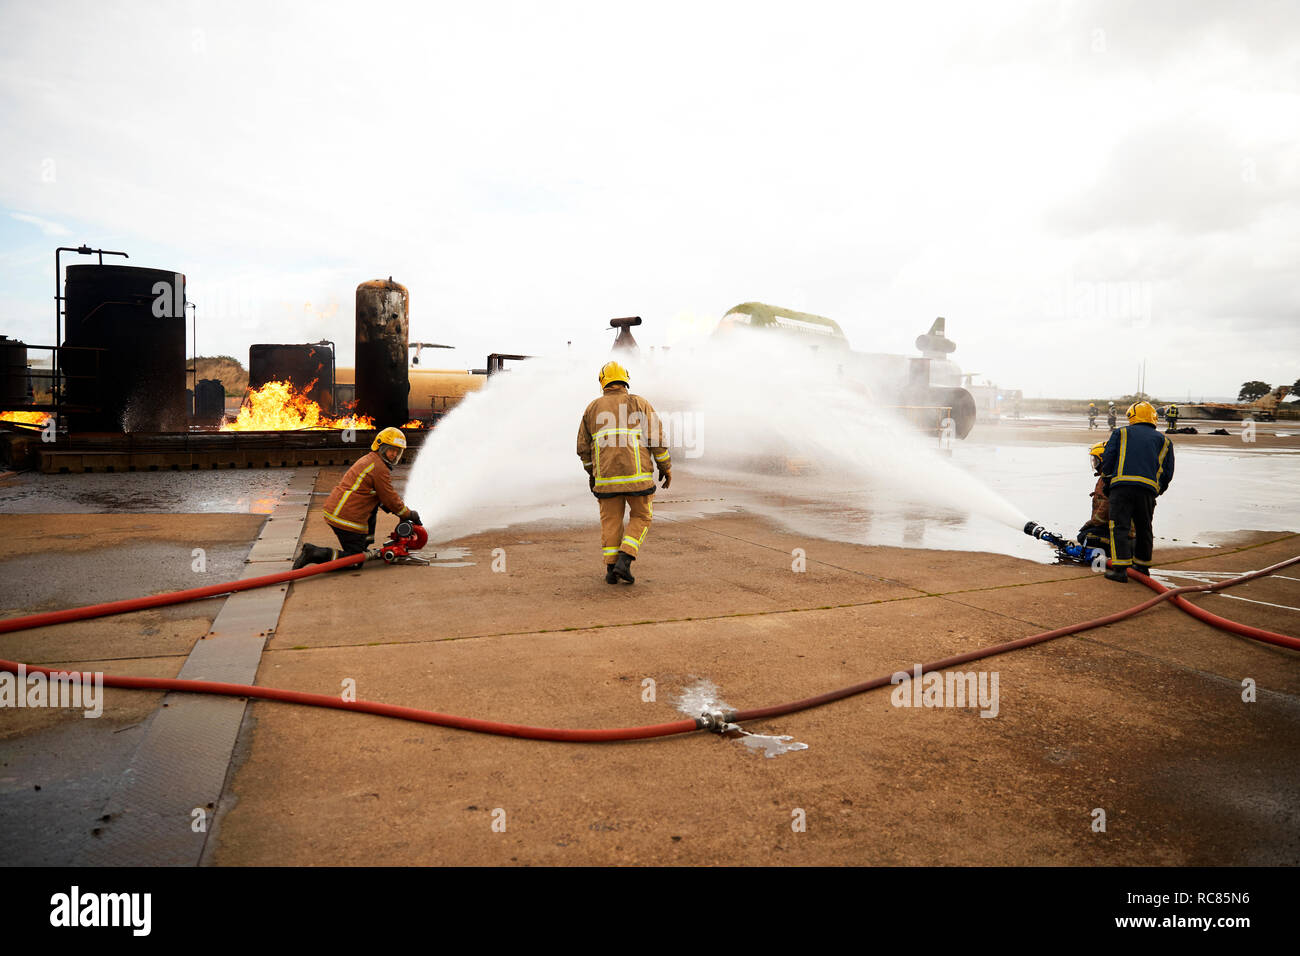 Firemen training, spraying water onto fire at training facility Stock Photo